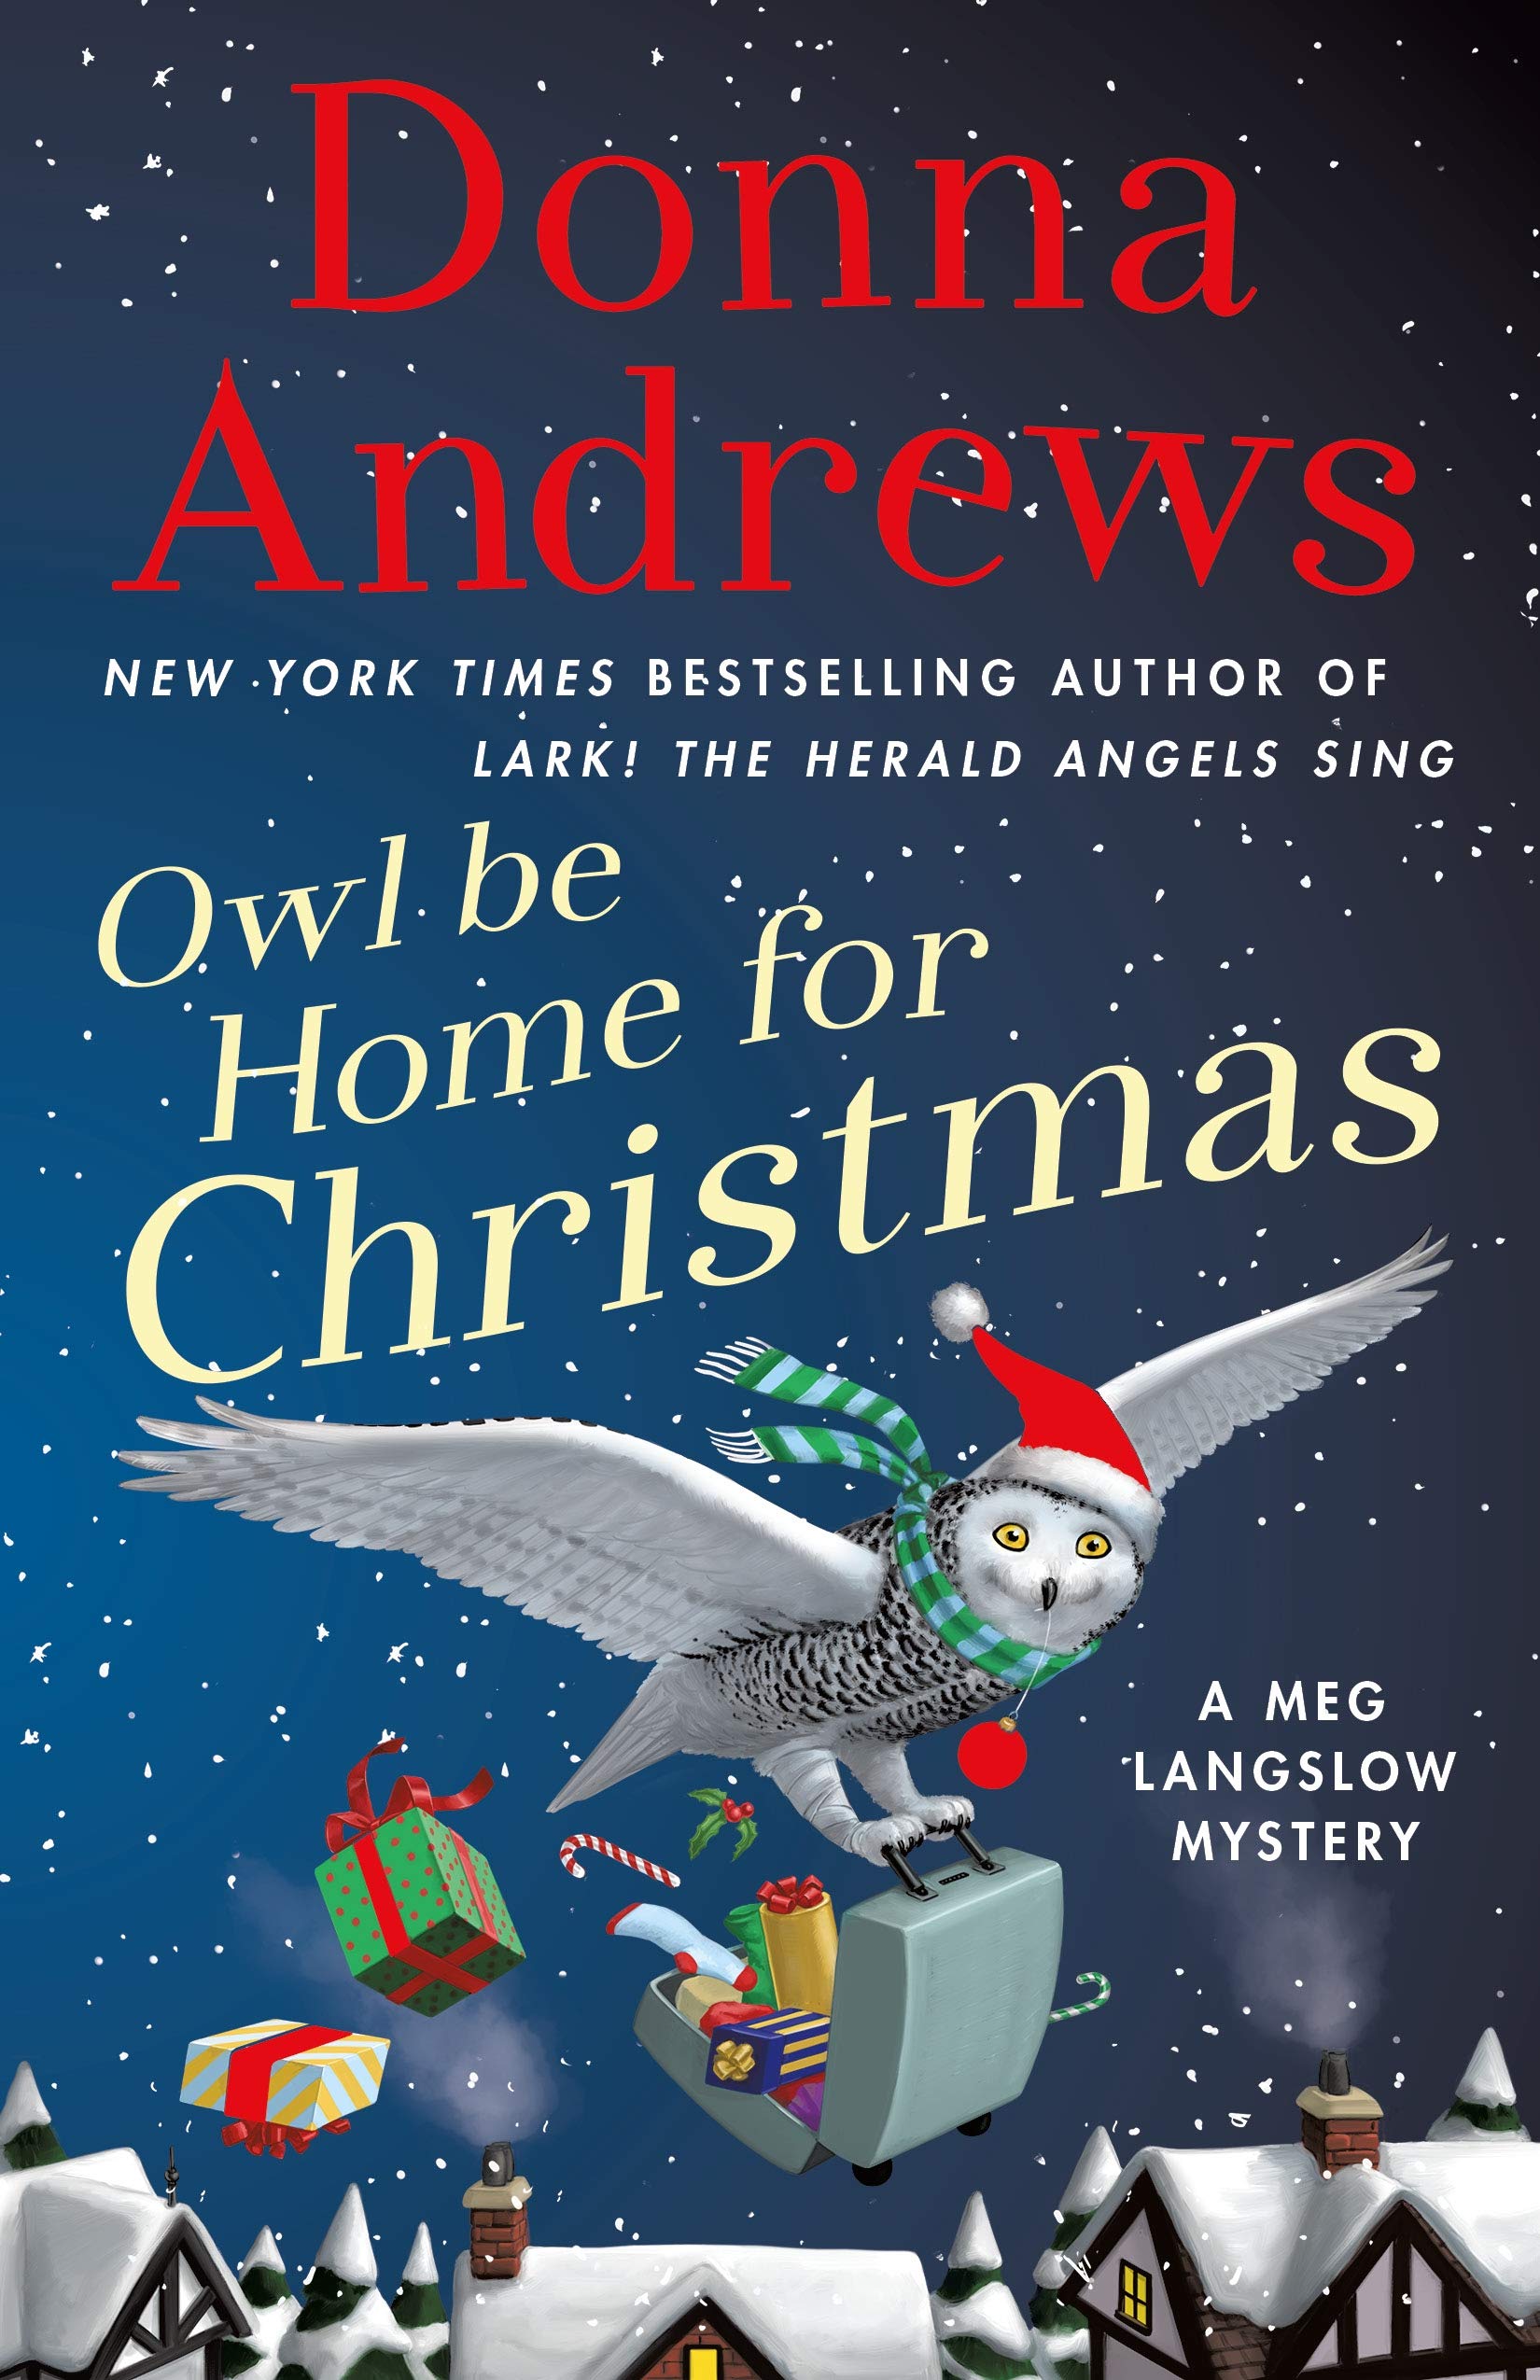 Owl Be Home for Christmas: A Meg Langslow Mystery